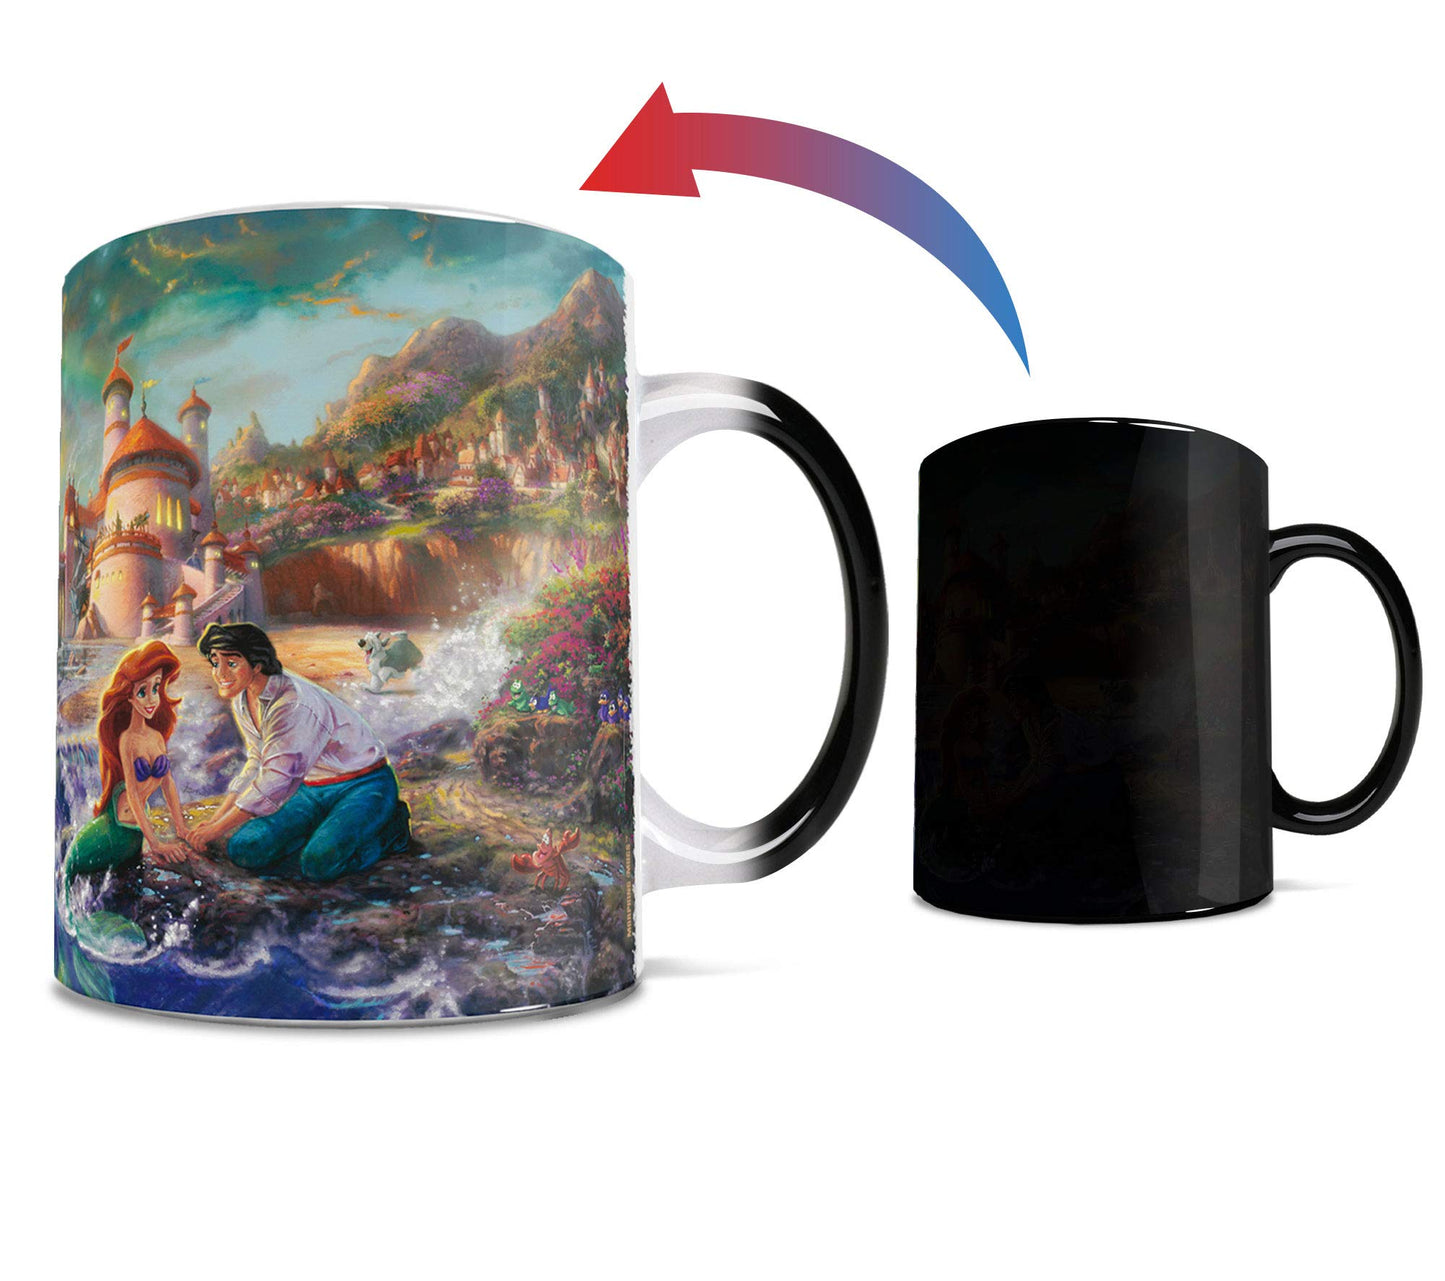 Disney – The Little Mermaid - Morphing Mugs Heat Sensitive Mug – Full image revealed when HOT liquid is added